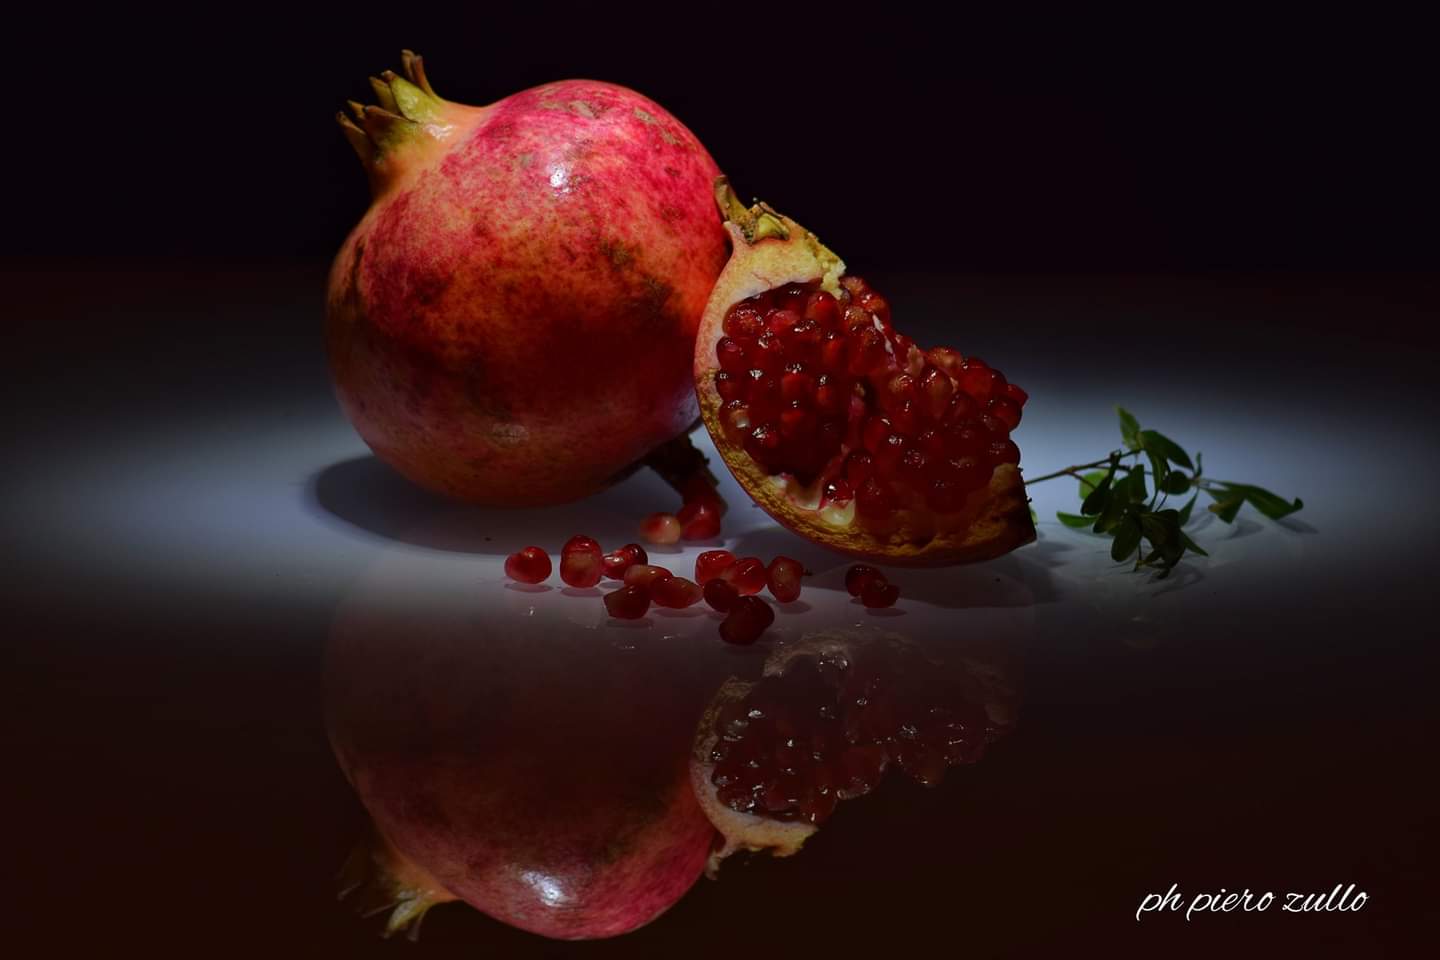 The pomegranate...